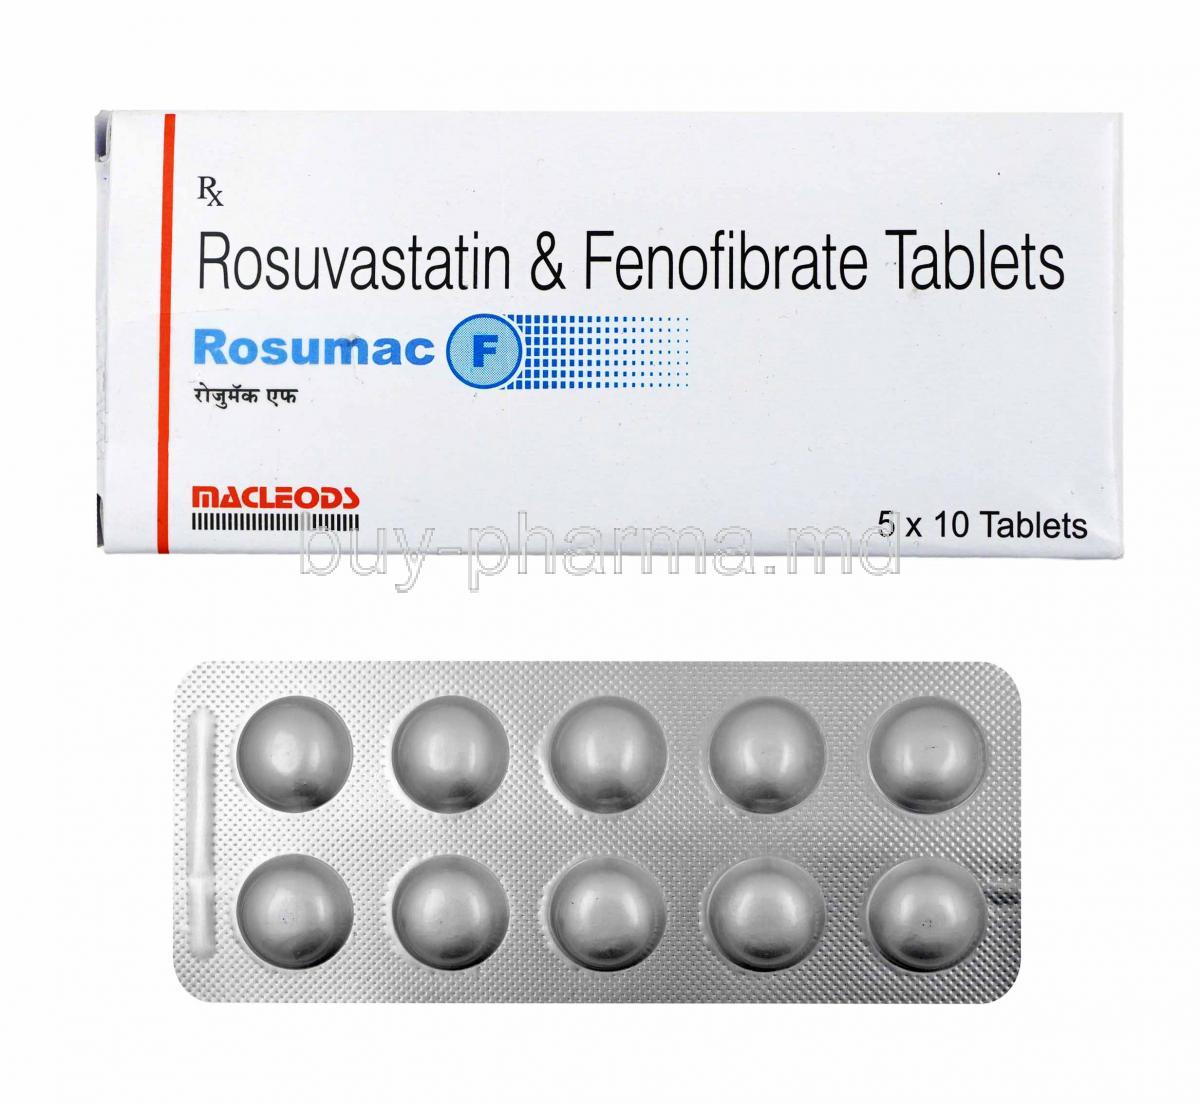 Rosumac F, Fenofibrate and Rosuvastatin 10mg box and tablets